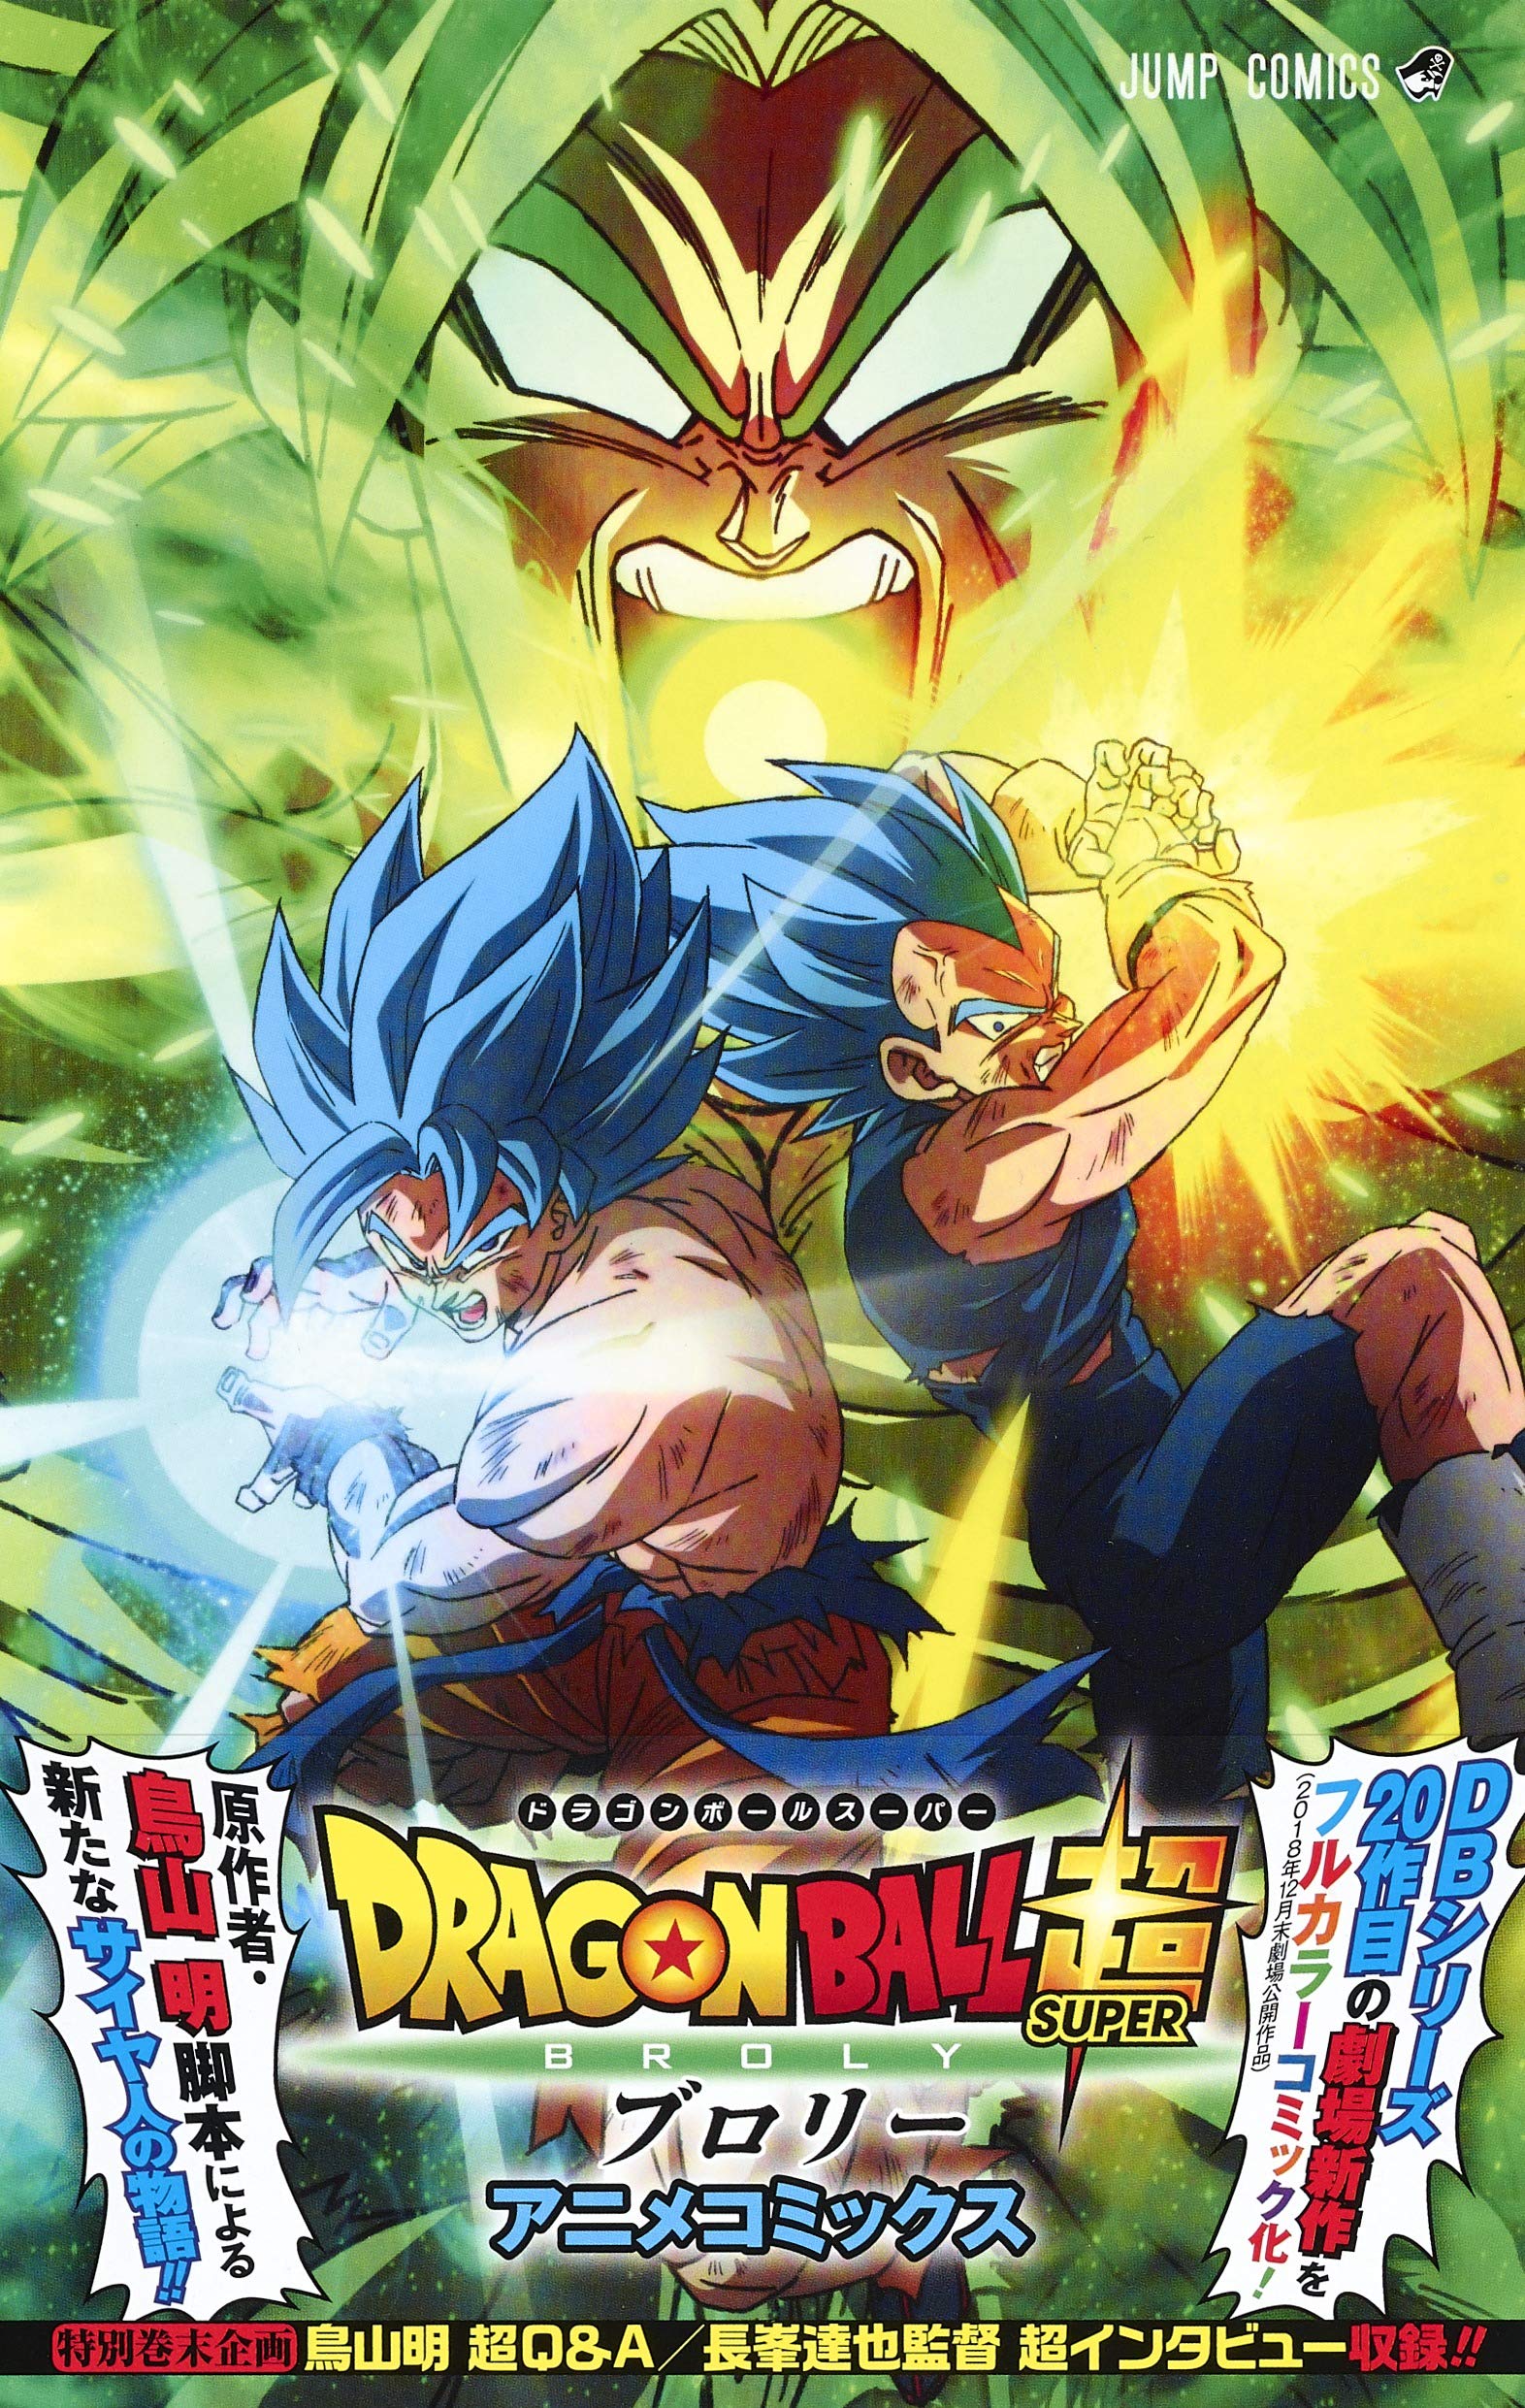 Dragon Ball Super - Super Hero - Anime Comics